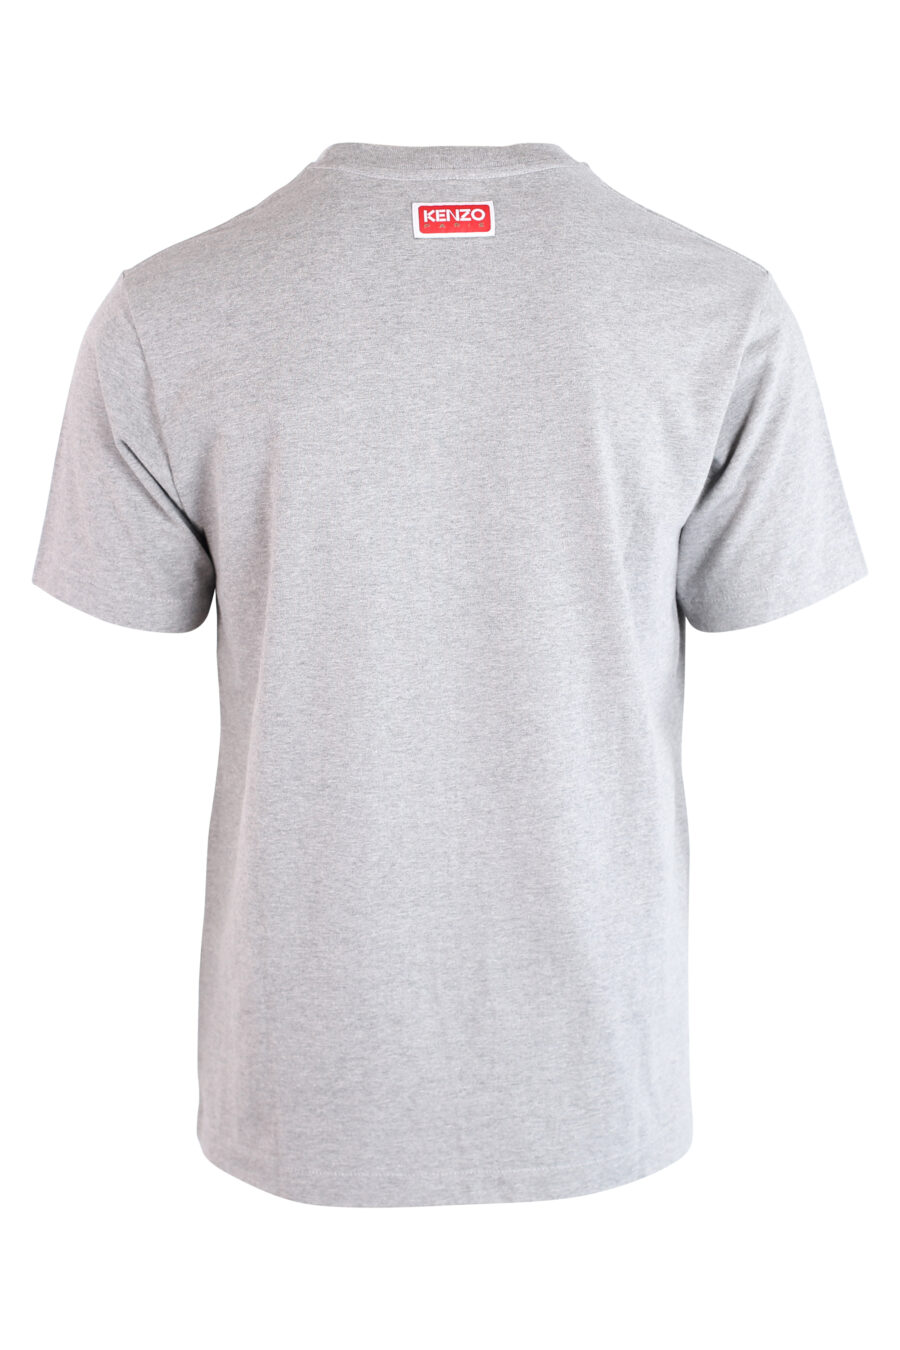 T-shirt gris avec maxillogramme "K" violet - IMG 3202